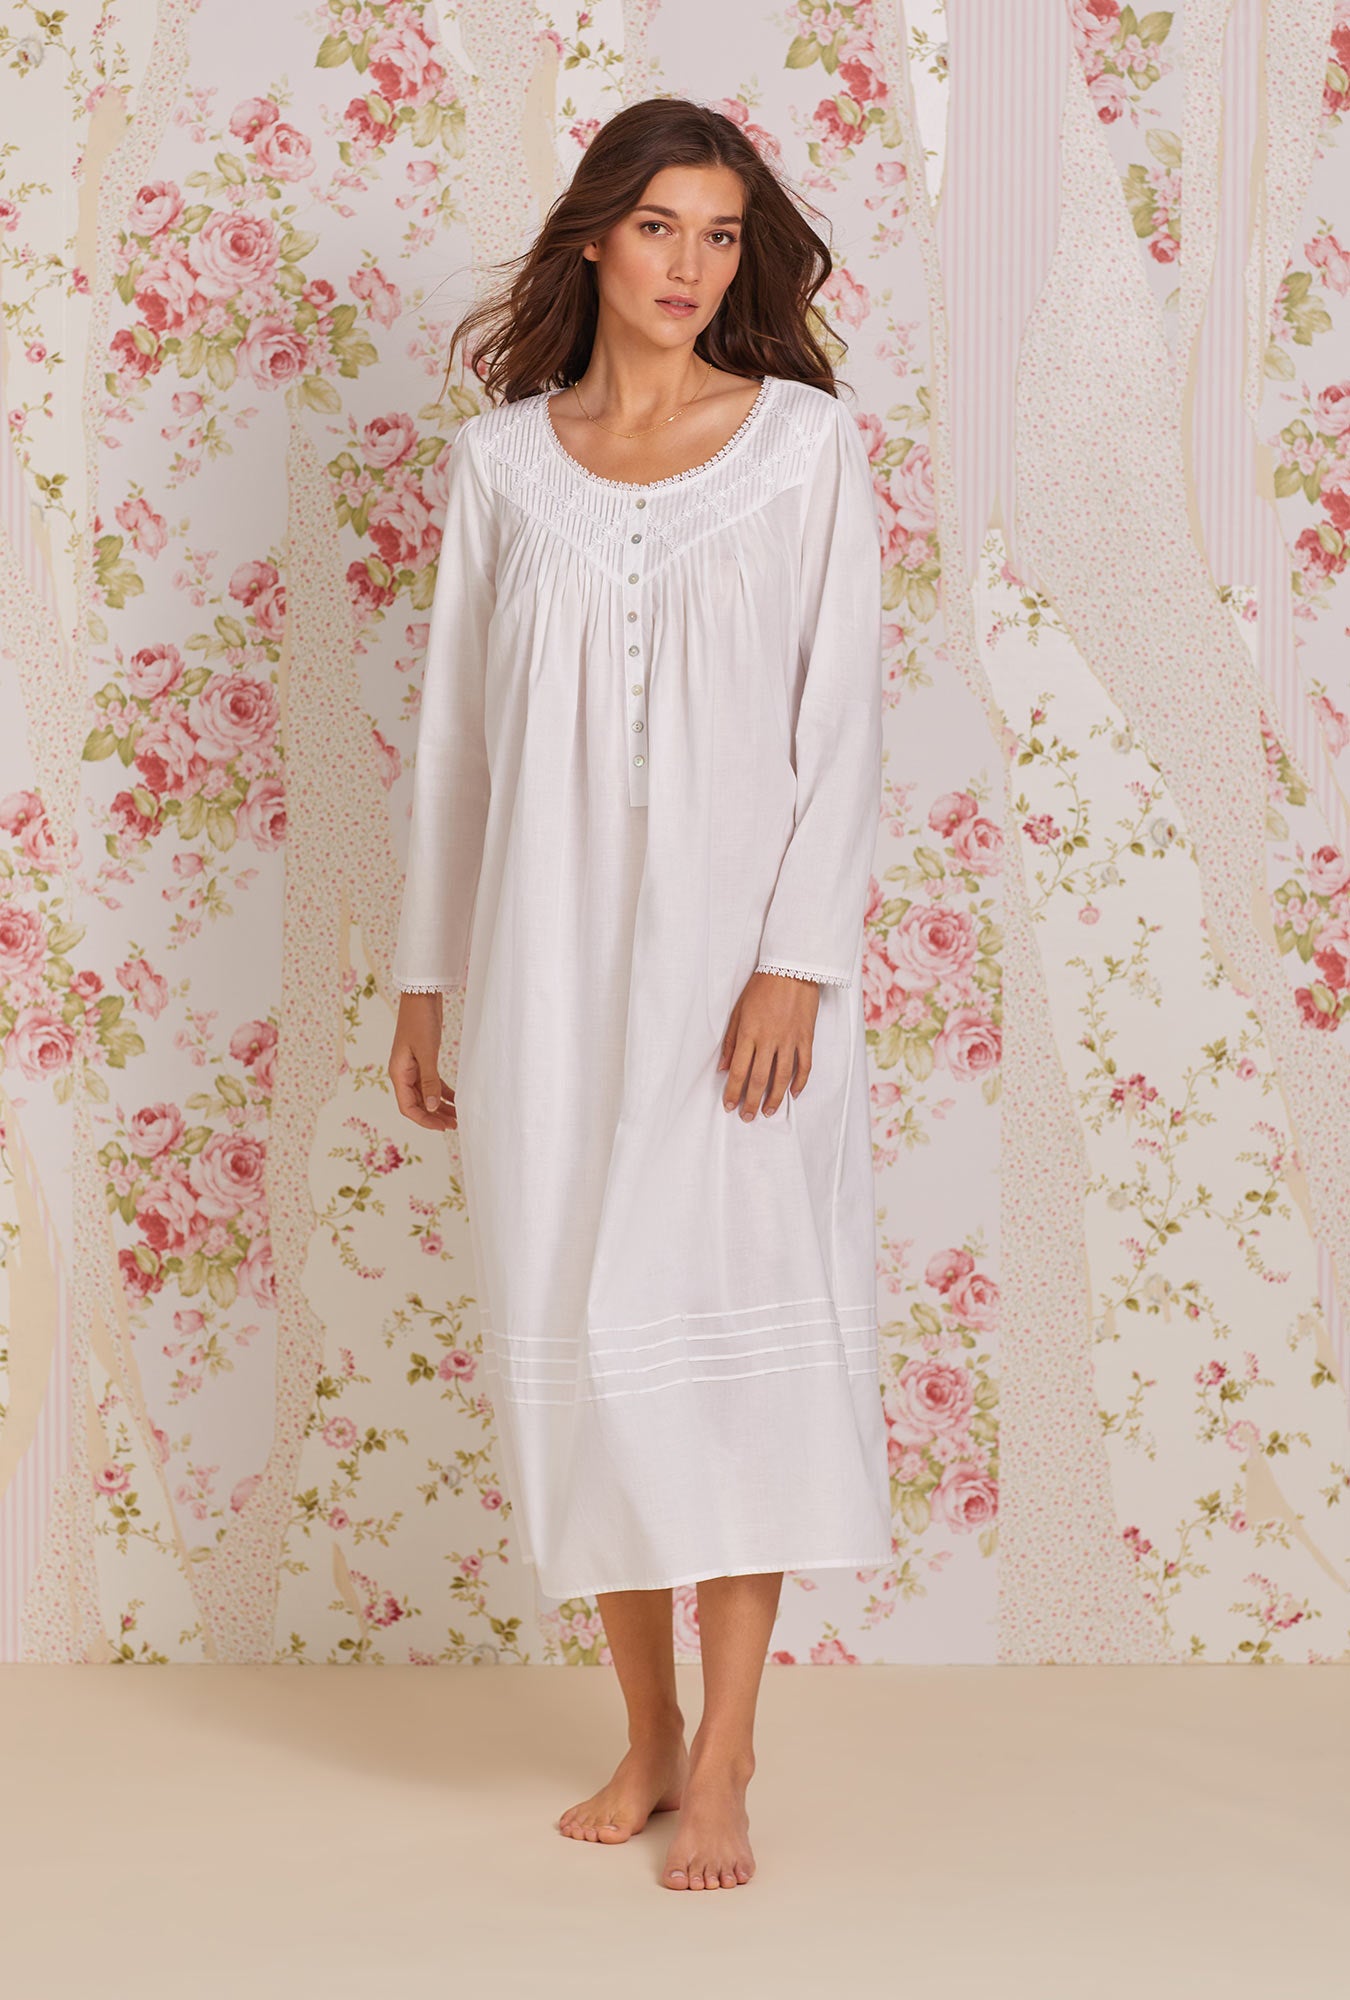 Nightgown PLUS SIZE White Pure Cotton and Crochet Lace. Romantic